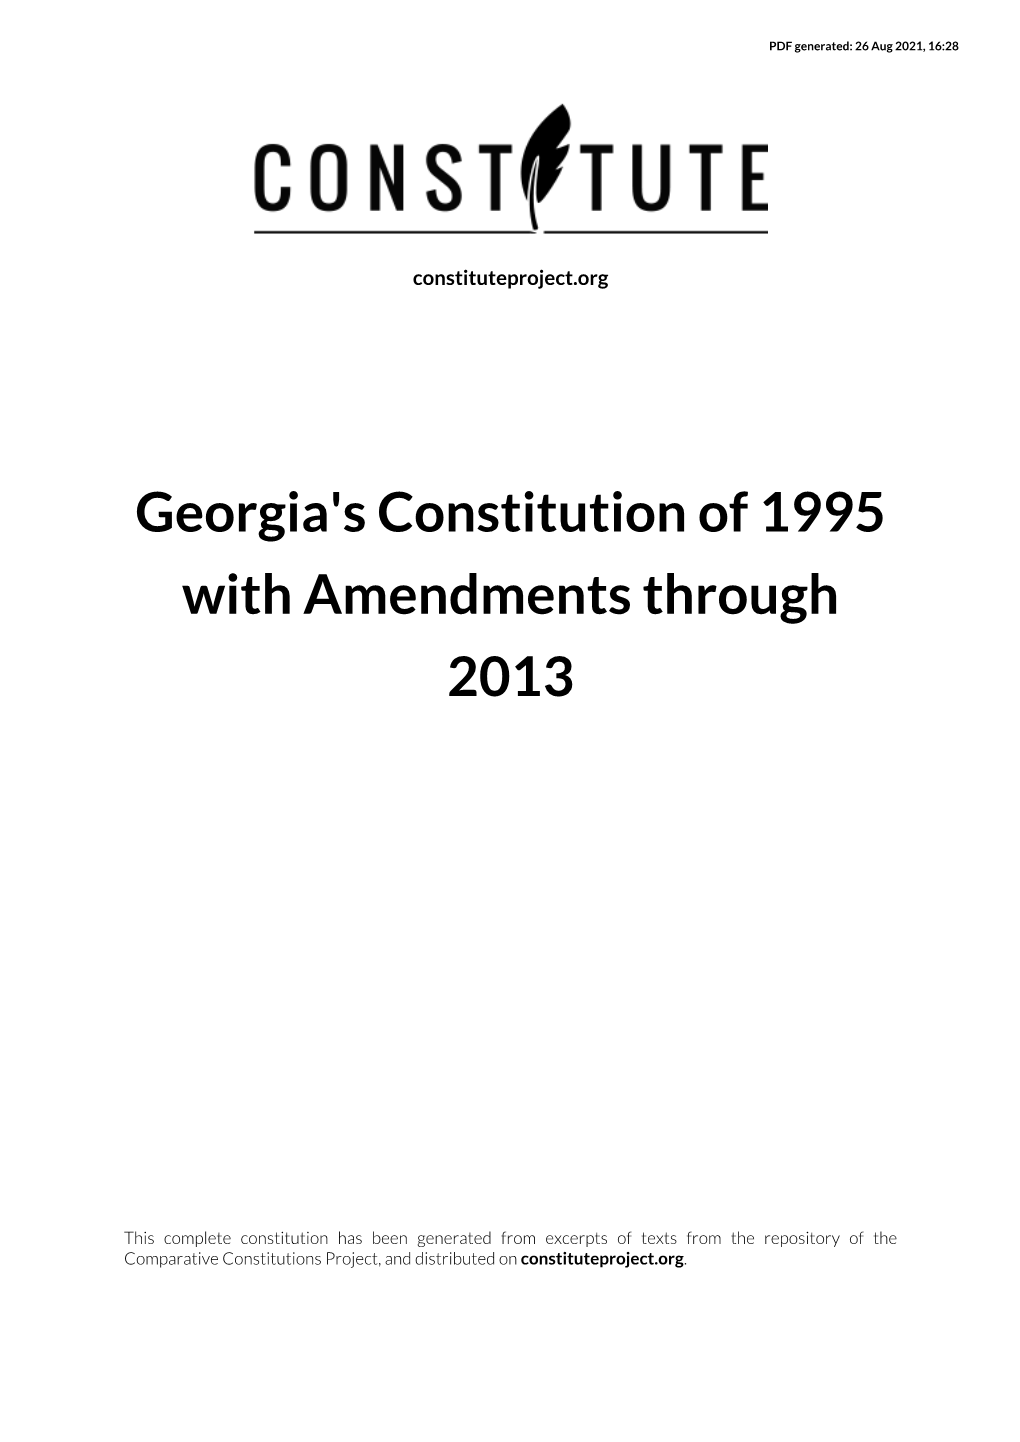 Georgia's Constitution of 1995 with Amendments Through 2013